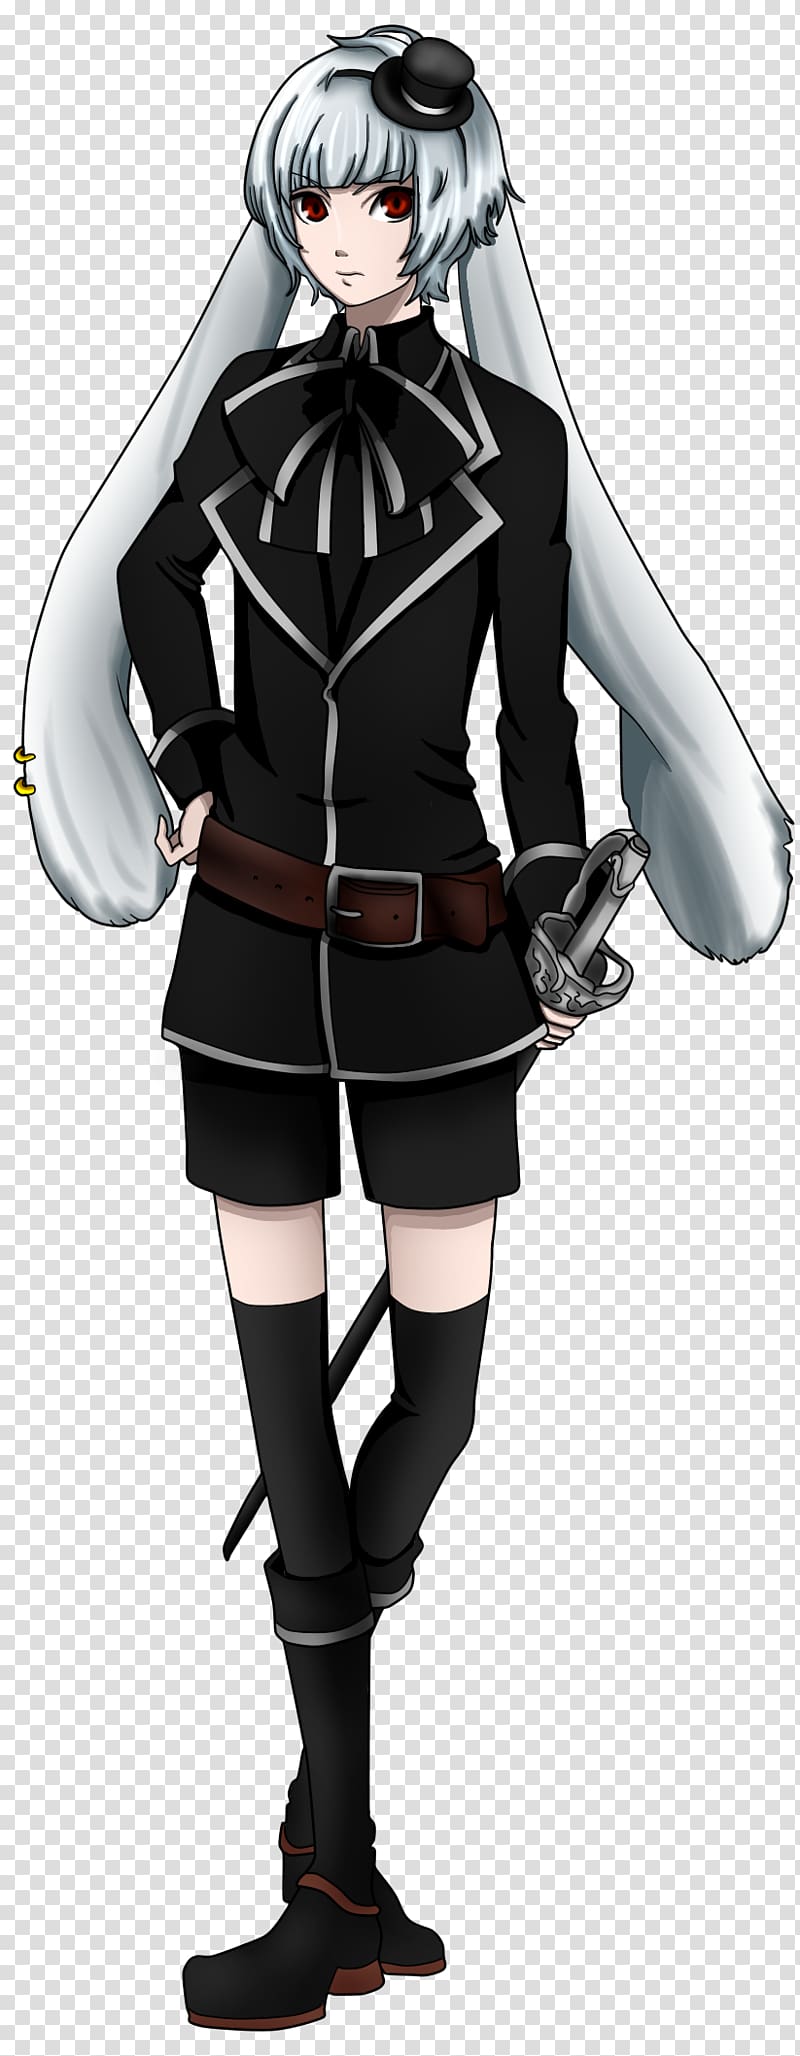 School uniform Mangaka Black hair Costume, white rabbit transparent background PNG clipart